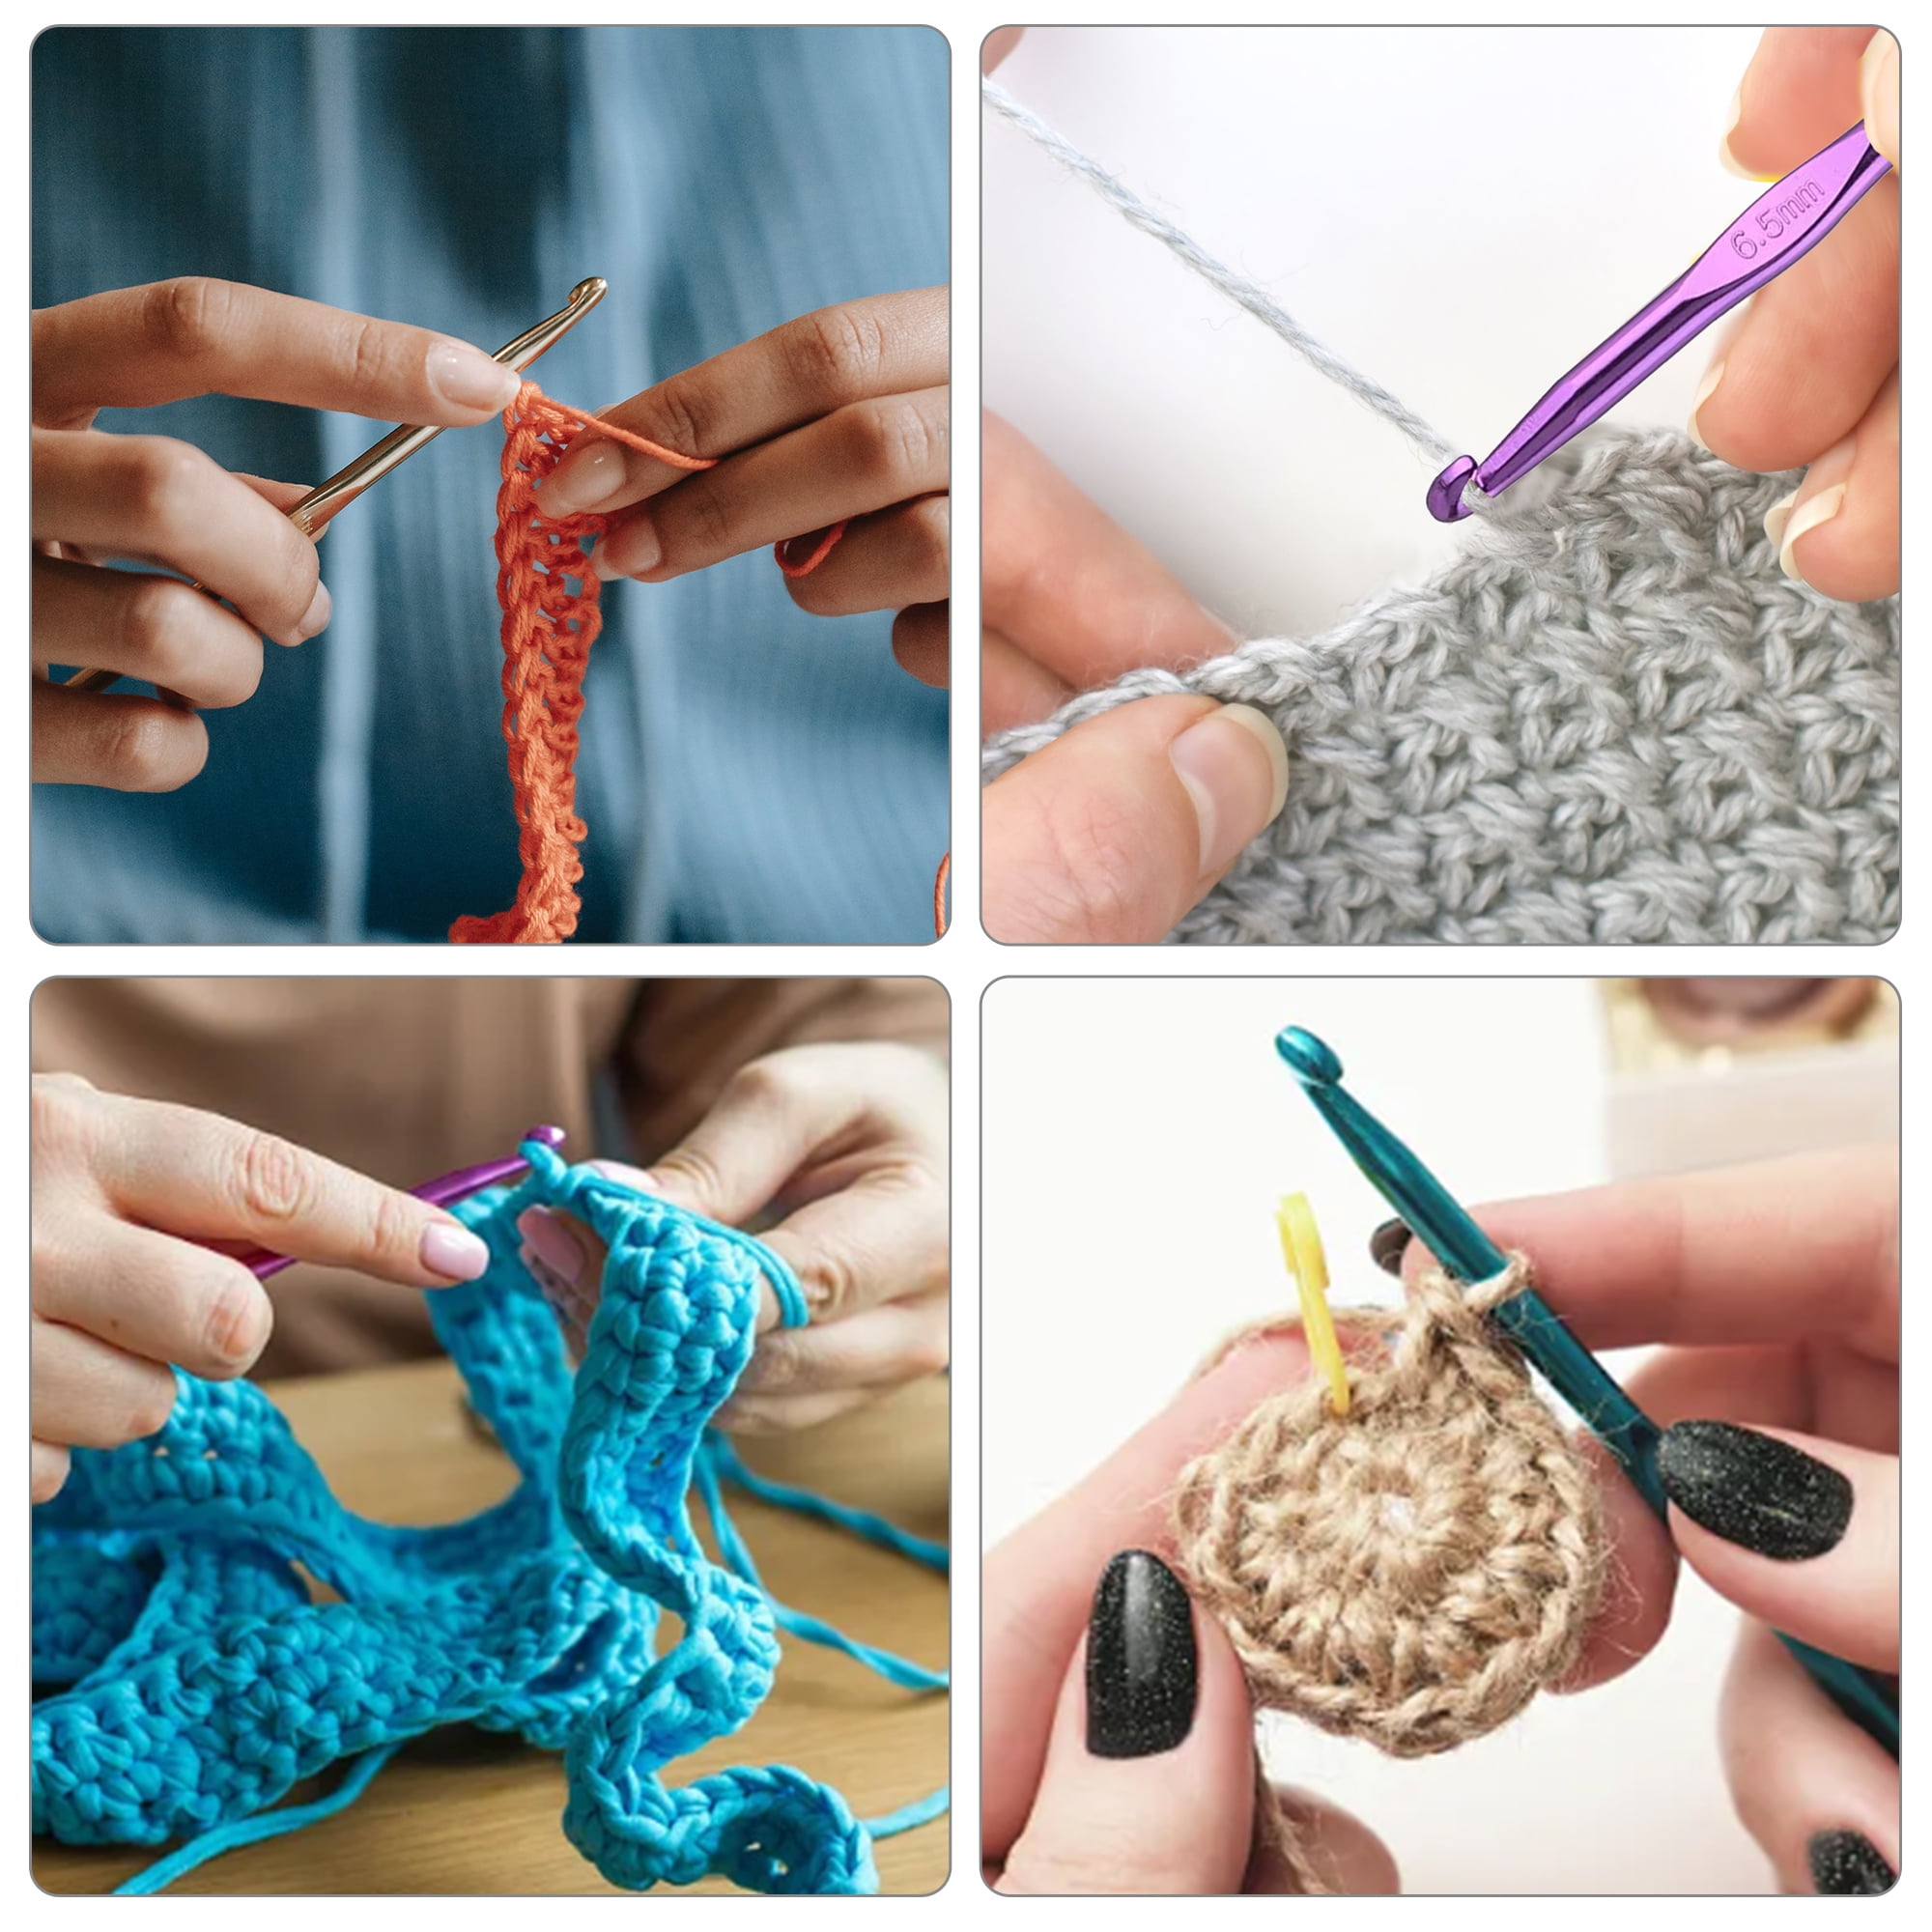 Knitting Tools Kit Crochet Kit For Beginners Adults Kits Include Yarn  Ergonomic Hooks Kids 231017 From Xuan10, $11.1